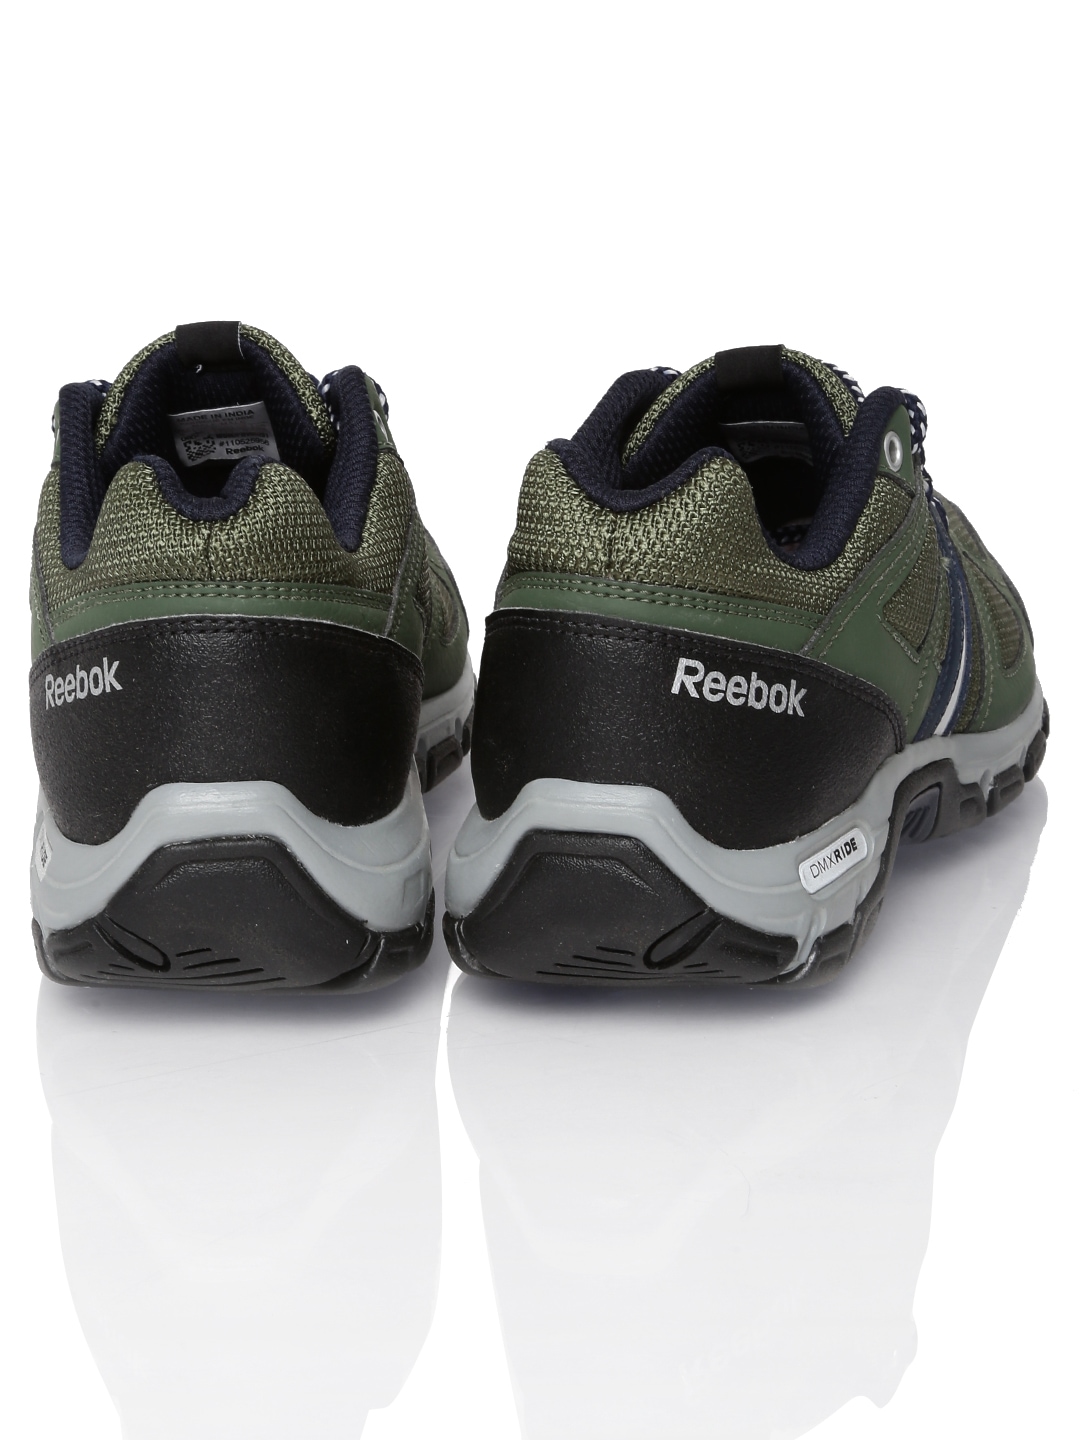 reebok adventure rider lp outdoors shoes